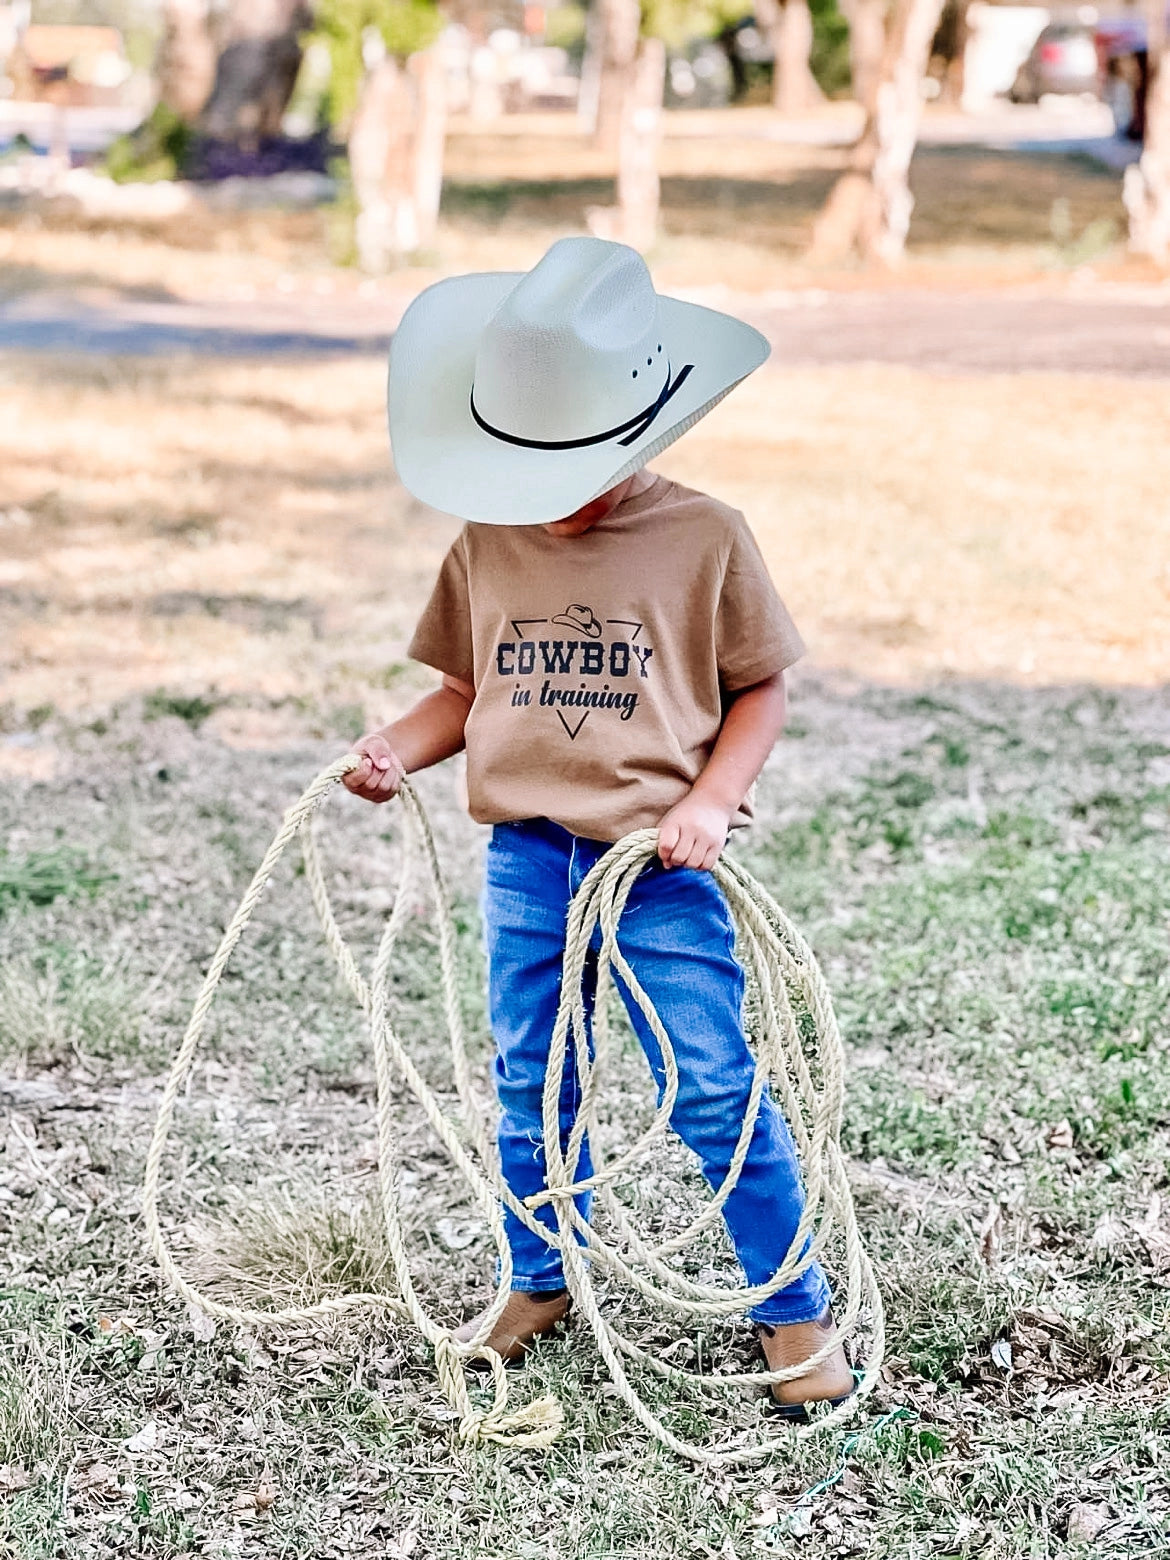 Cowboy in training tee